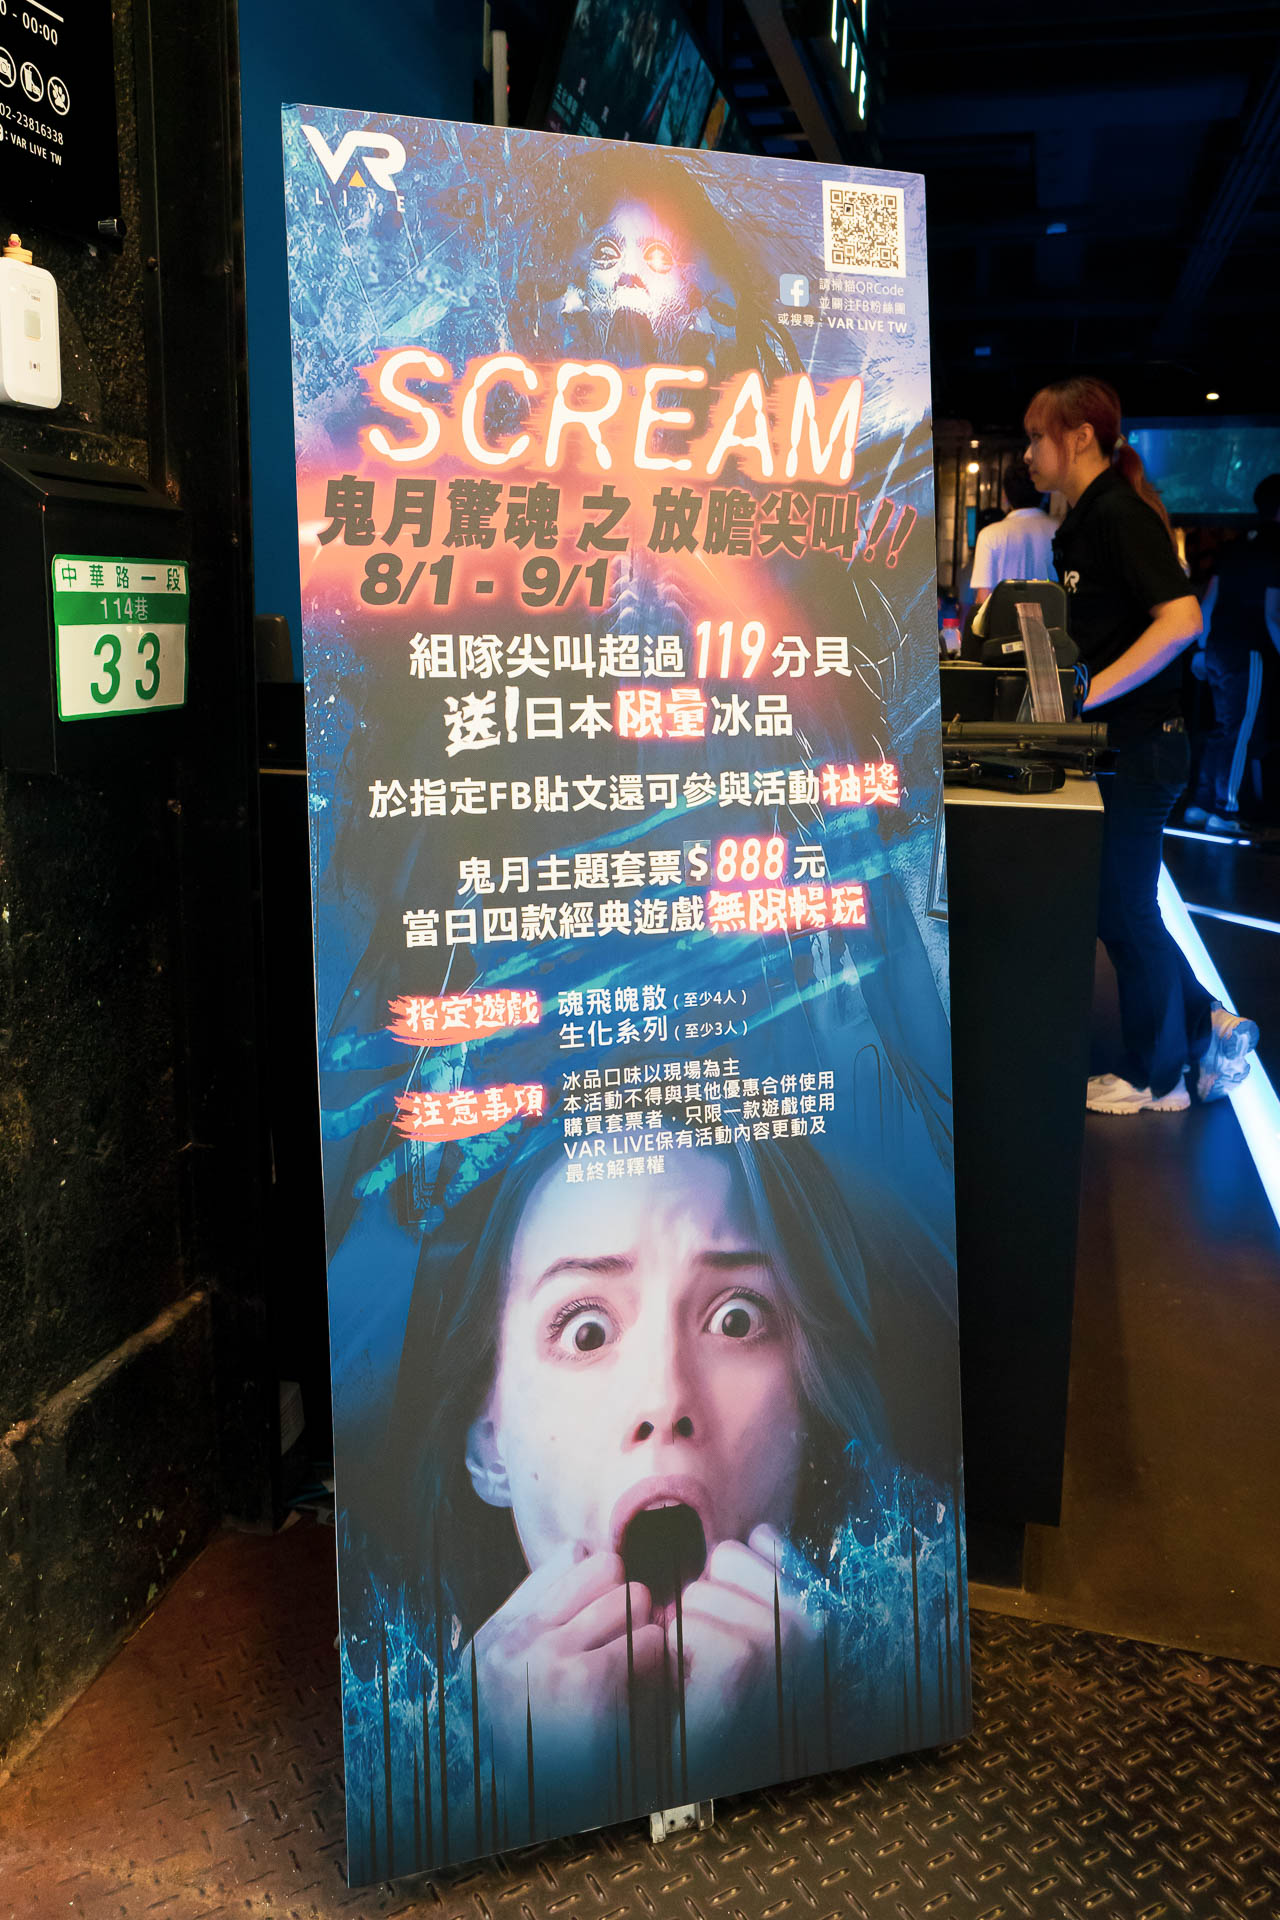 VAR LIVE西門旗艦店 》台北VR遊戲 超逼真體感遊戲體驗！多款遊戲心得